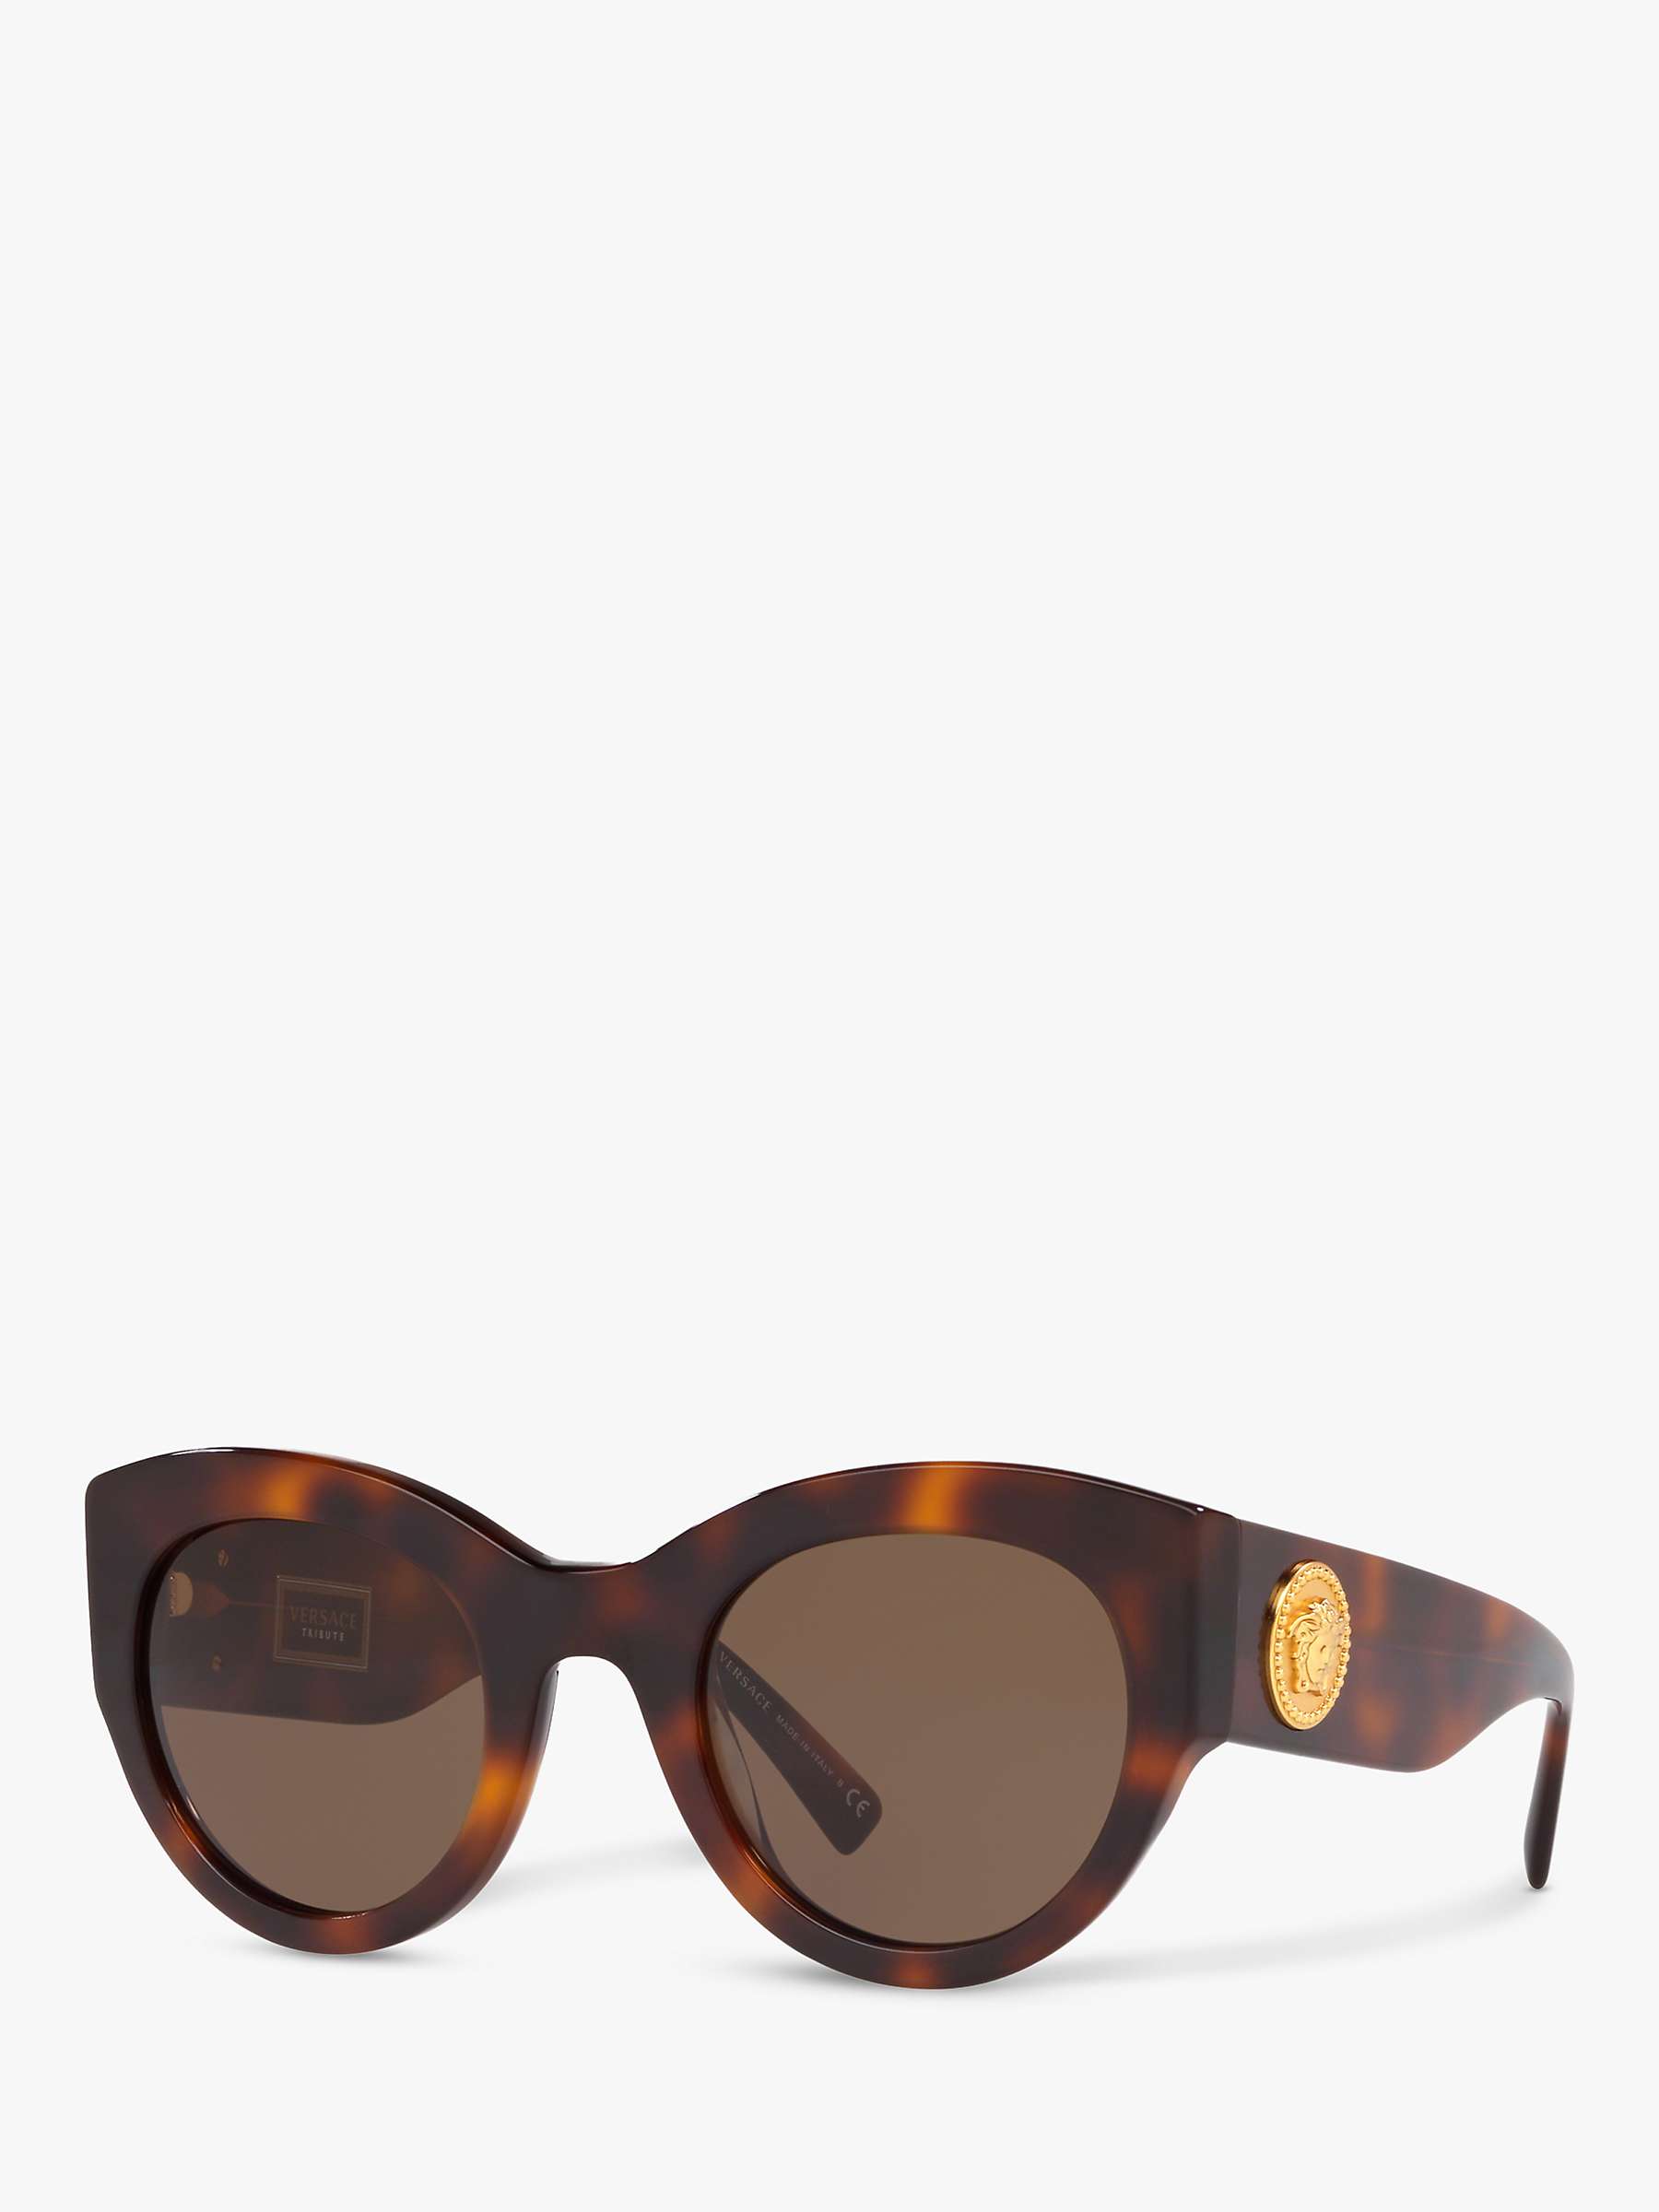 Versace VE4353 Women's Cat's Eye Sunglasses, Havana/Brown at John Lewis ...